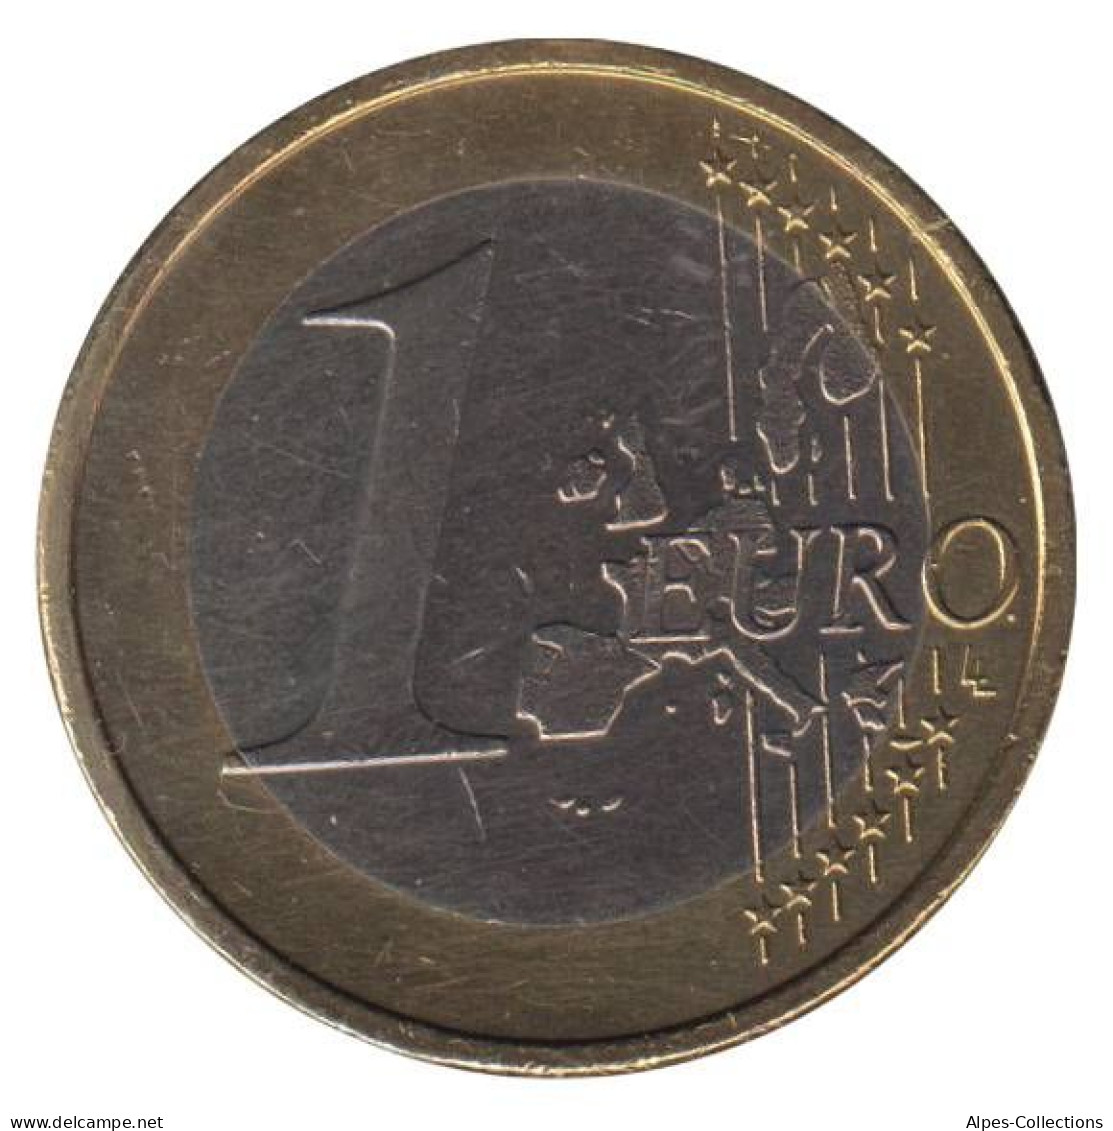 AL10002.1A - ALLEMAGNE - 1 Euro - 2002 A - Alemania